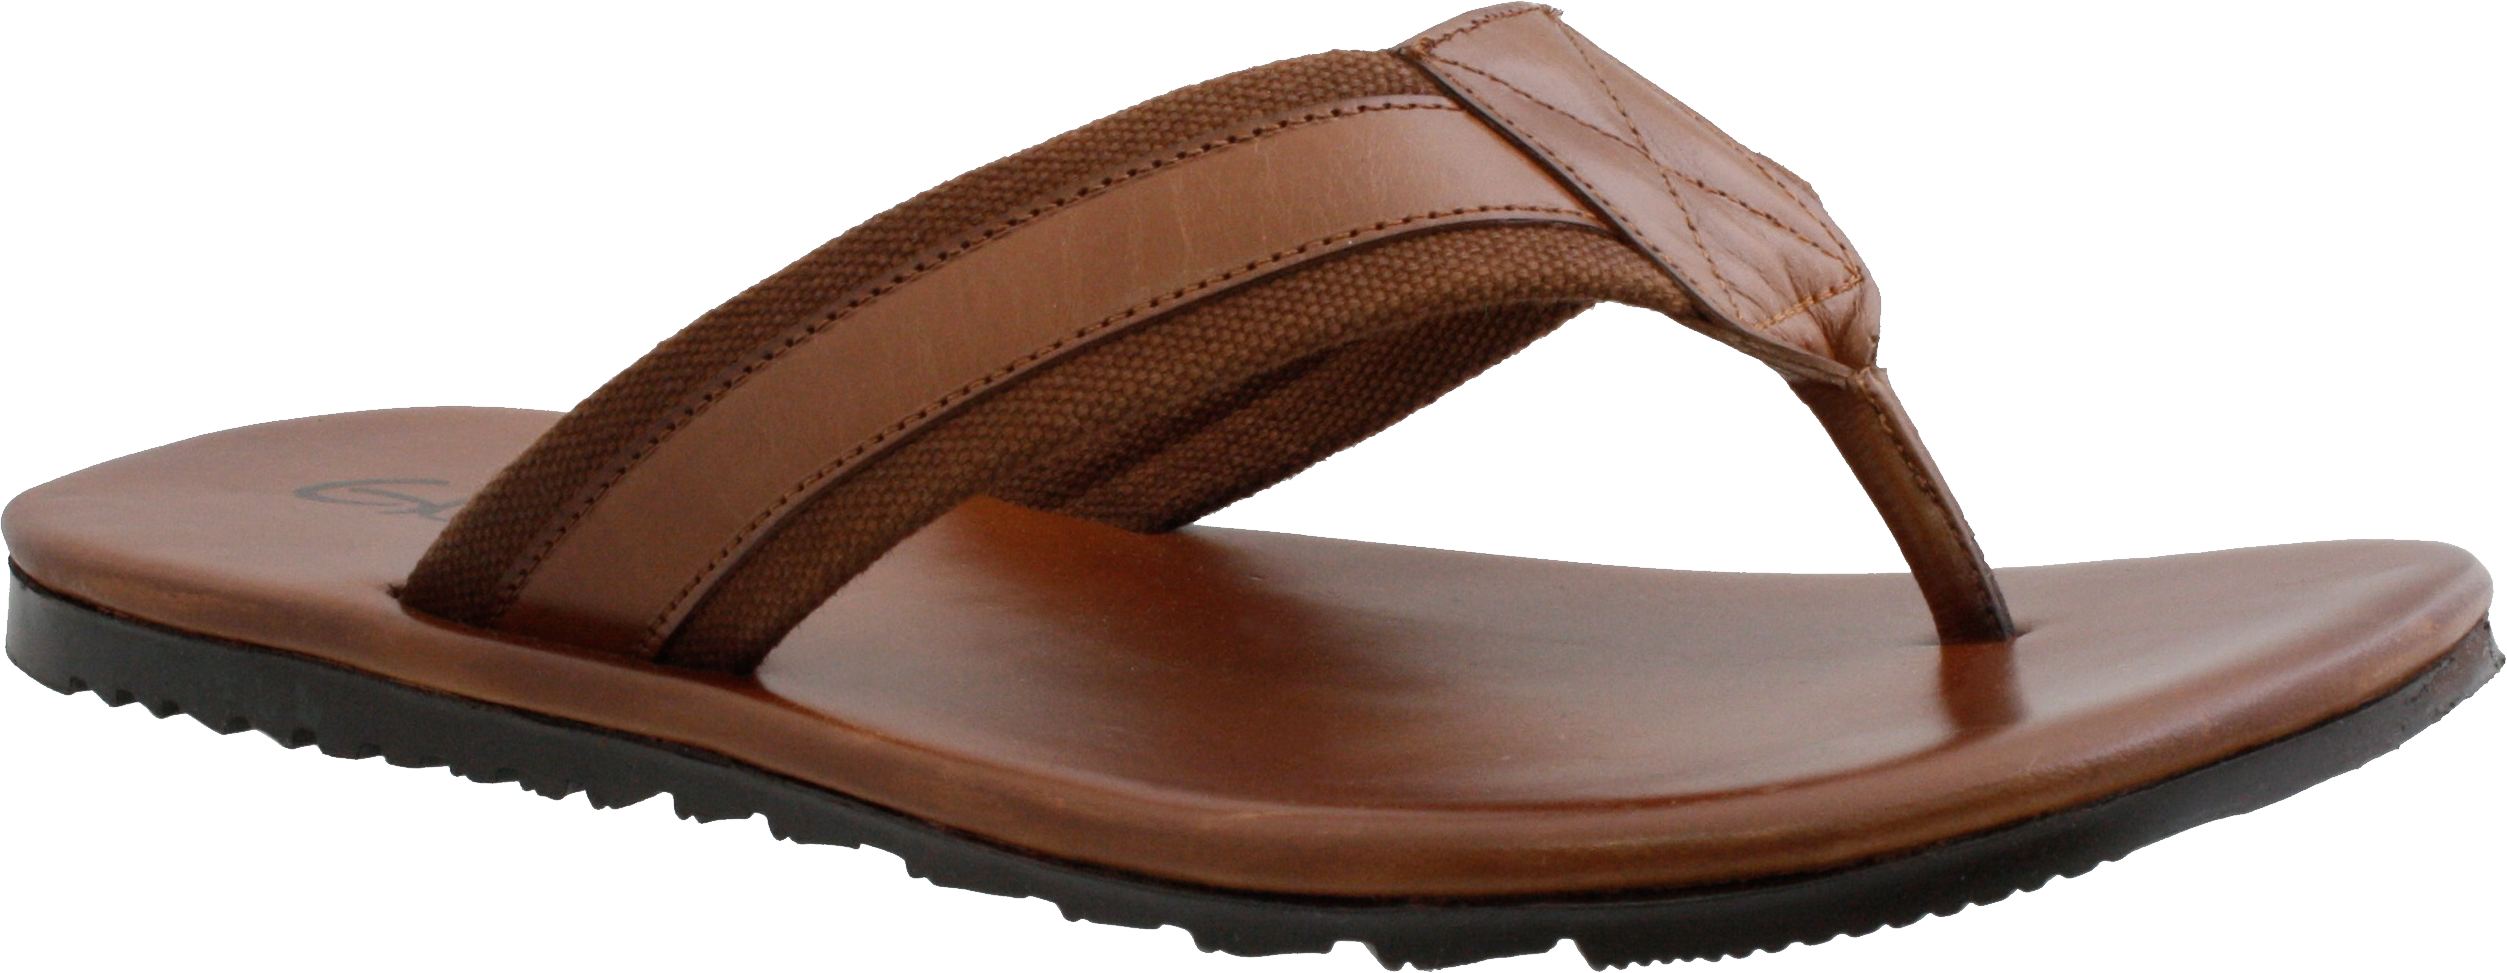 Leather Sandals Png Image - Sandals, Transparent background PNG HD thumbnail